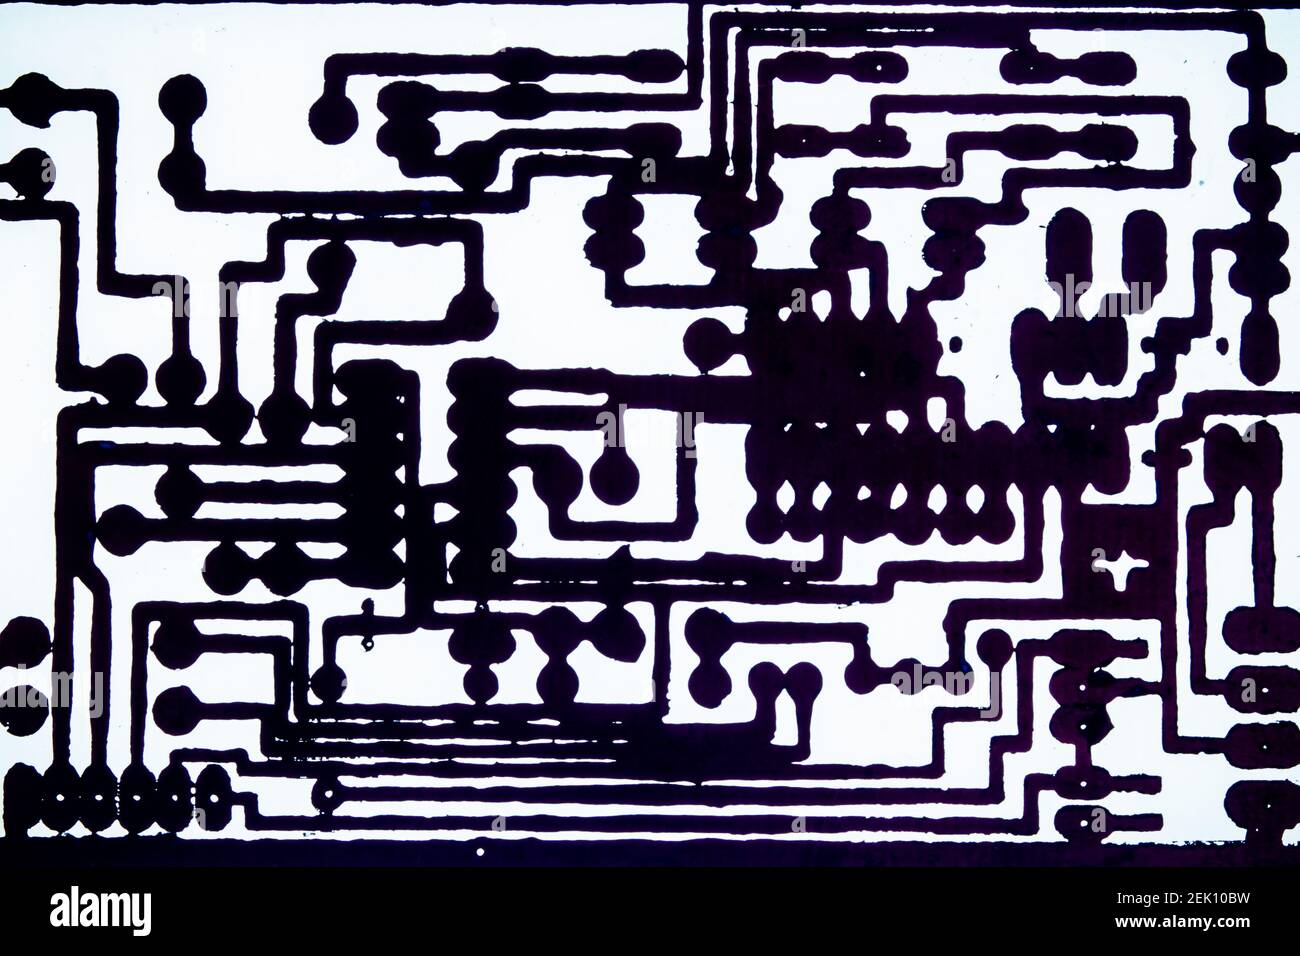 black printed circuit board tracks on white background Stock Photo